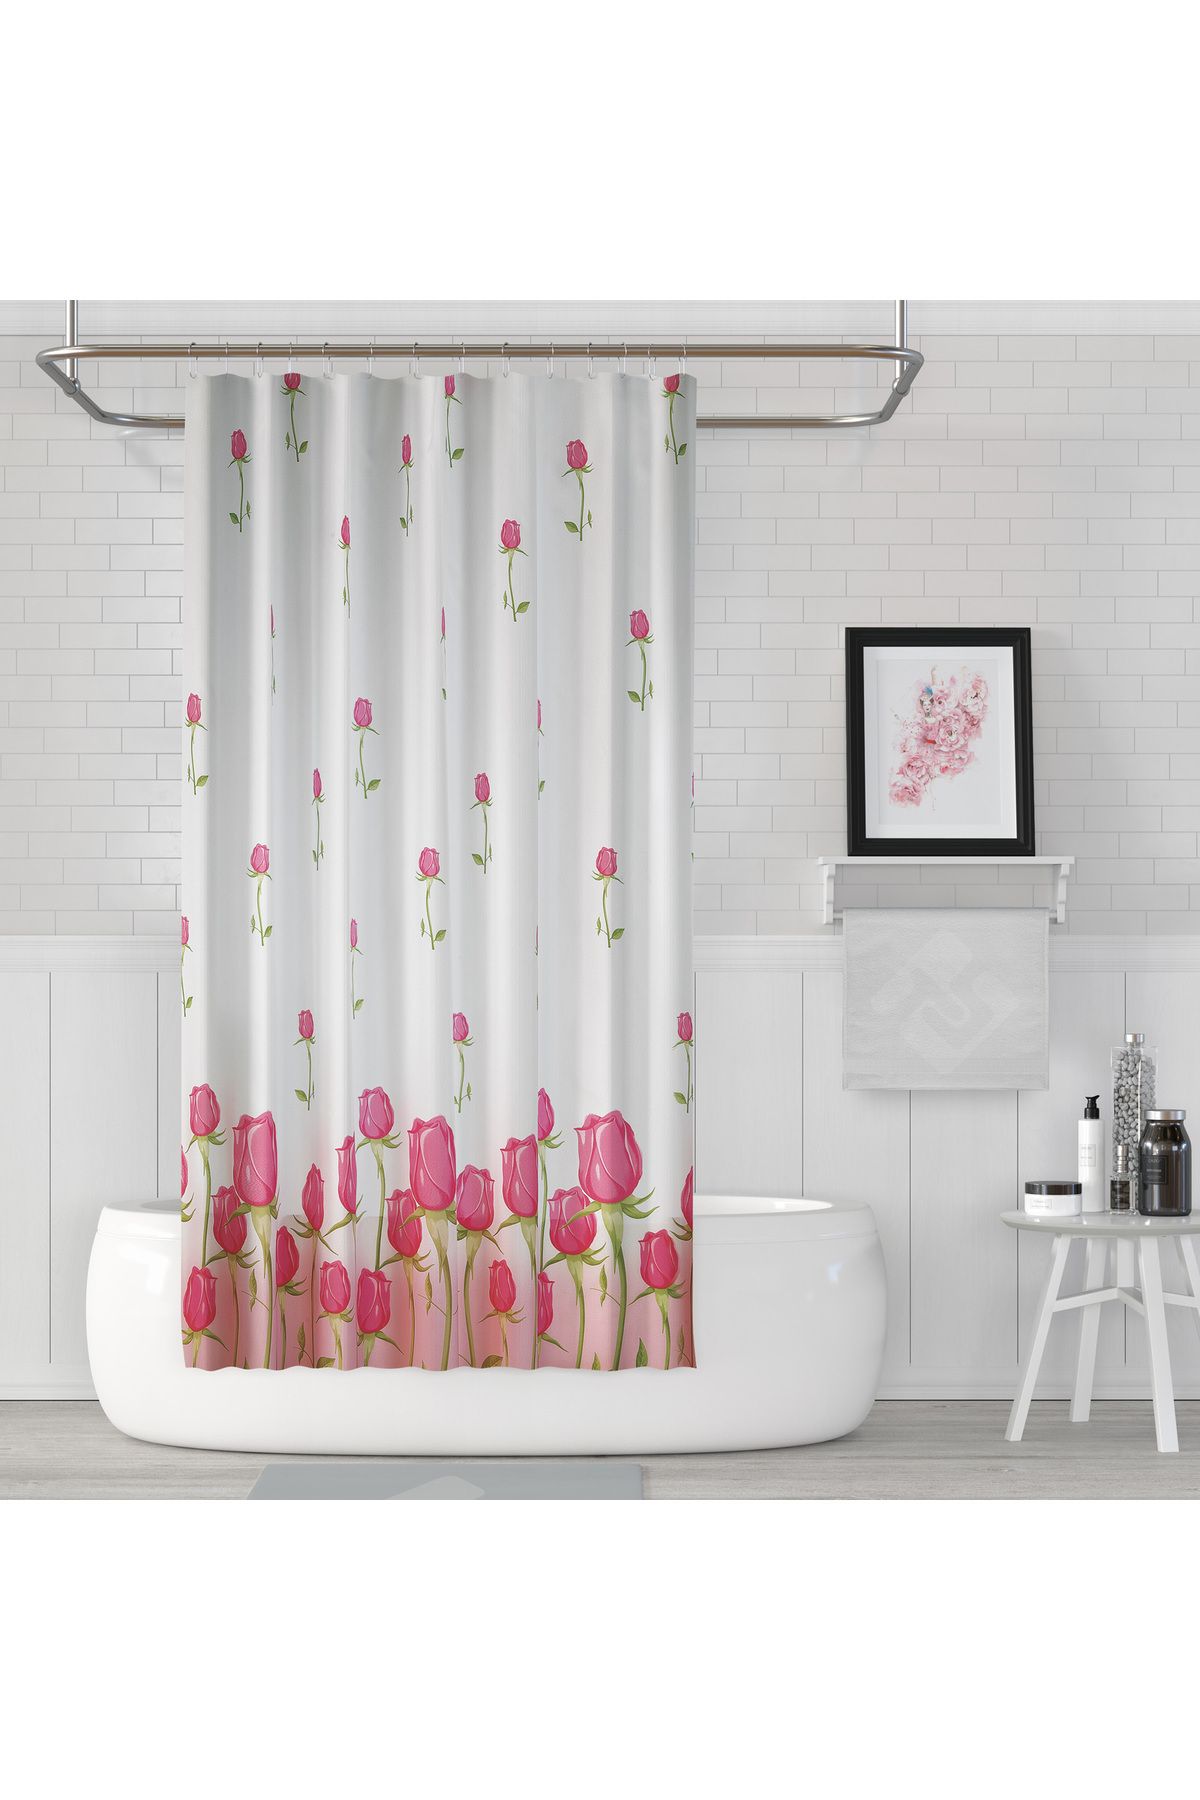 Tropikhome Duş Perdesi Çift Kanat 2x120x200cm Pembe Gül Desenli Banyo Perdesi 16 Adet C Halka Hediyeli